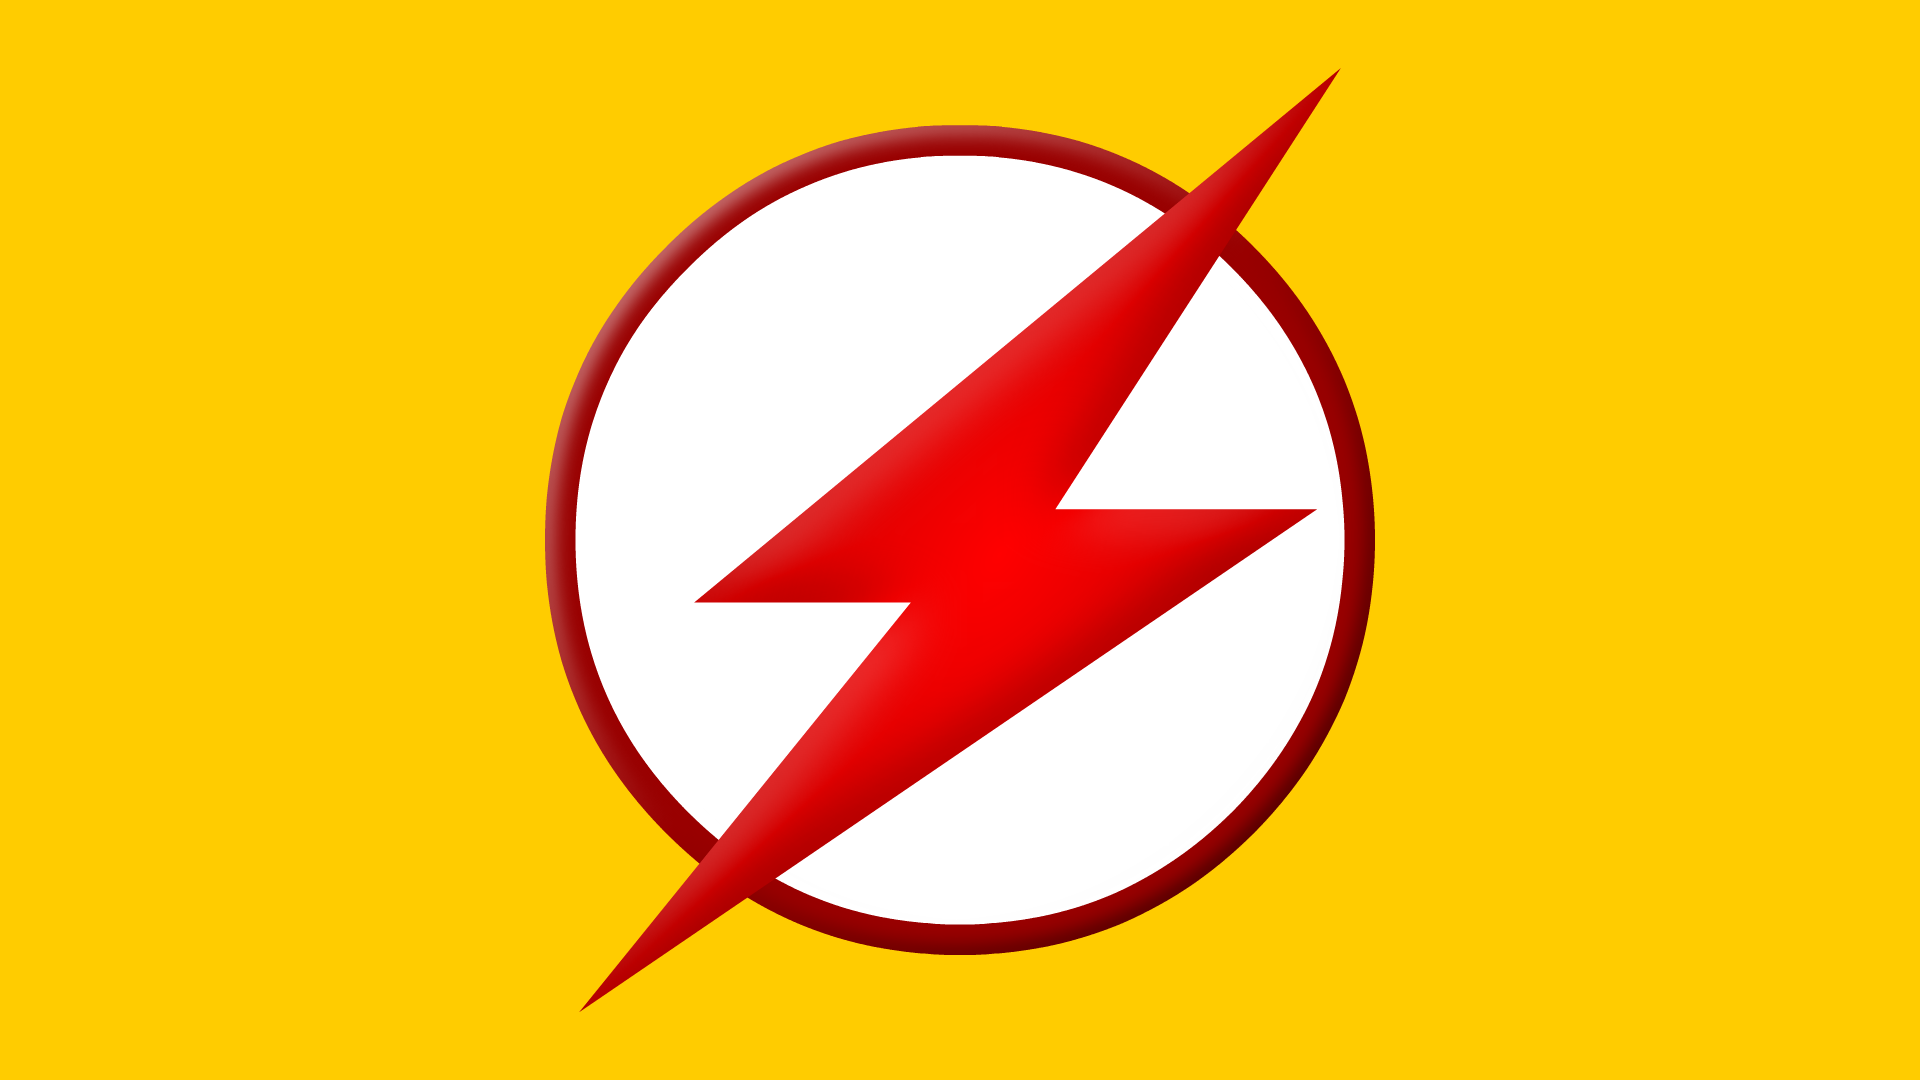 Kid Flash Backgrounds, Compatible - PC, Mobile, Gadgets| 1920x1080 px